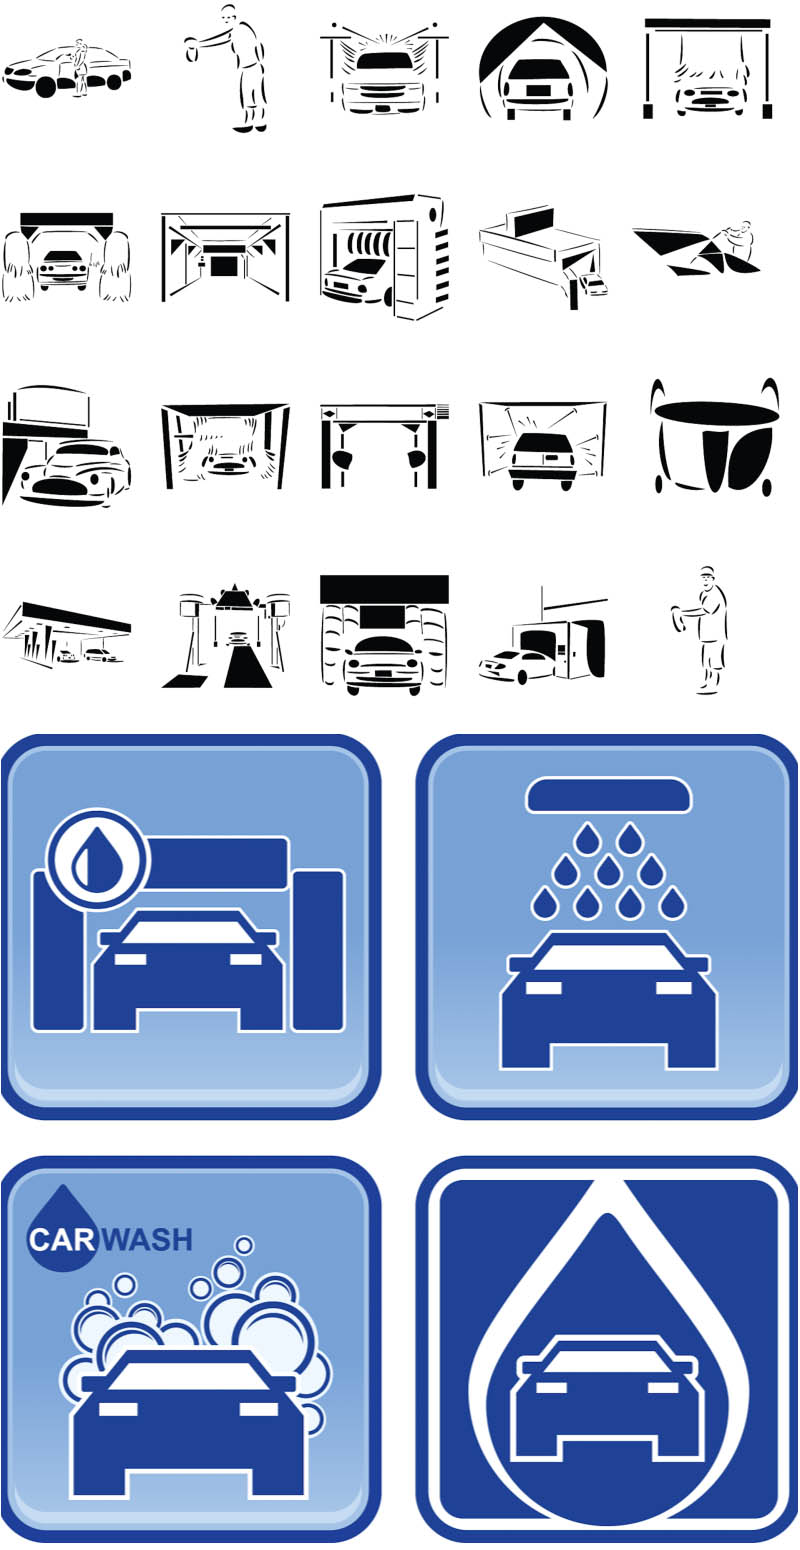 Car wash icons vector